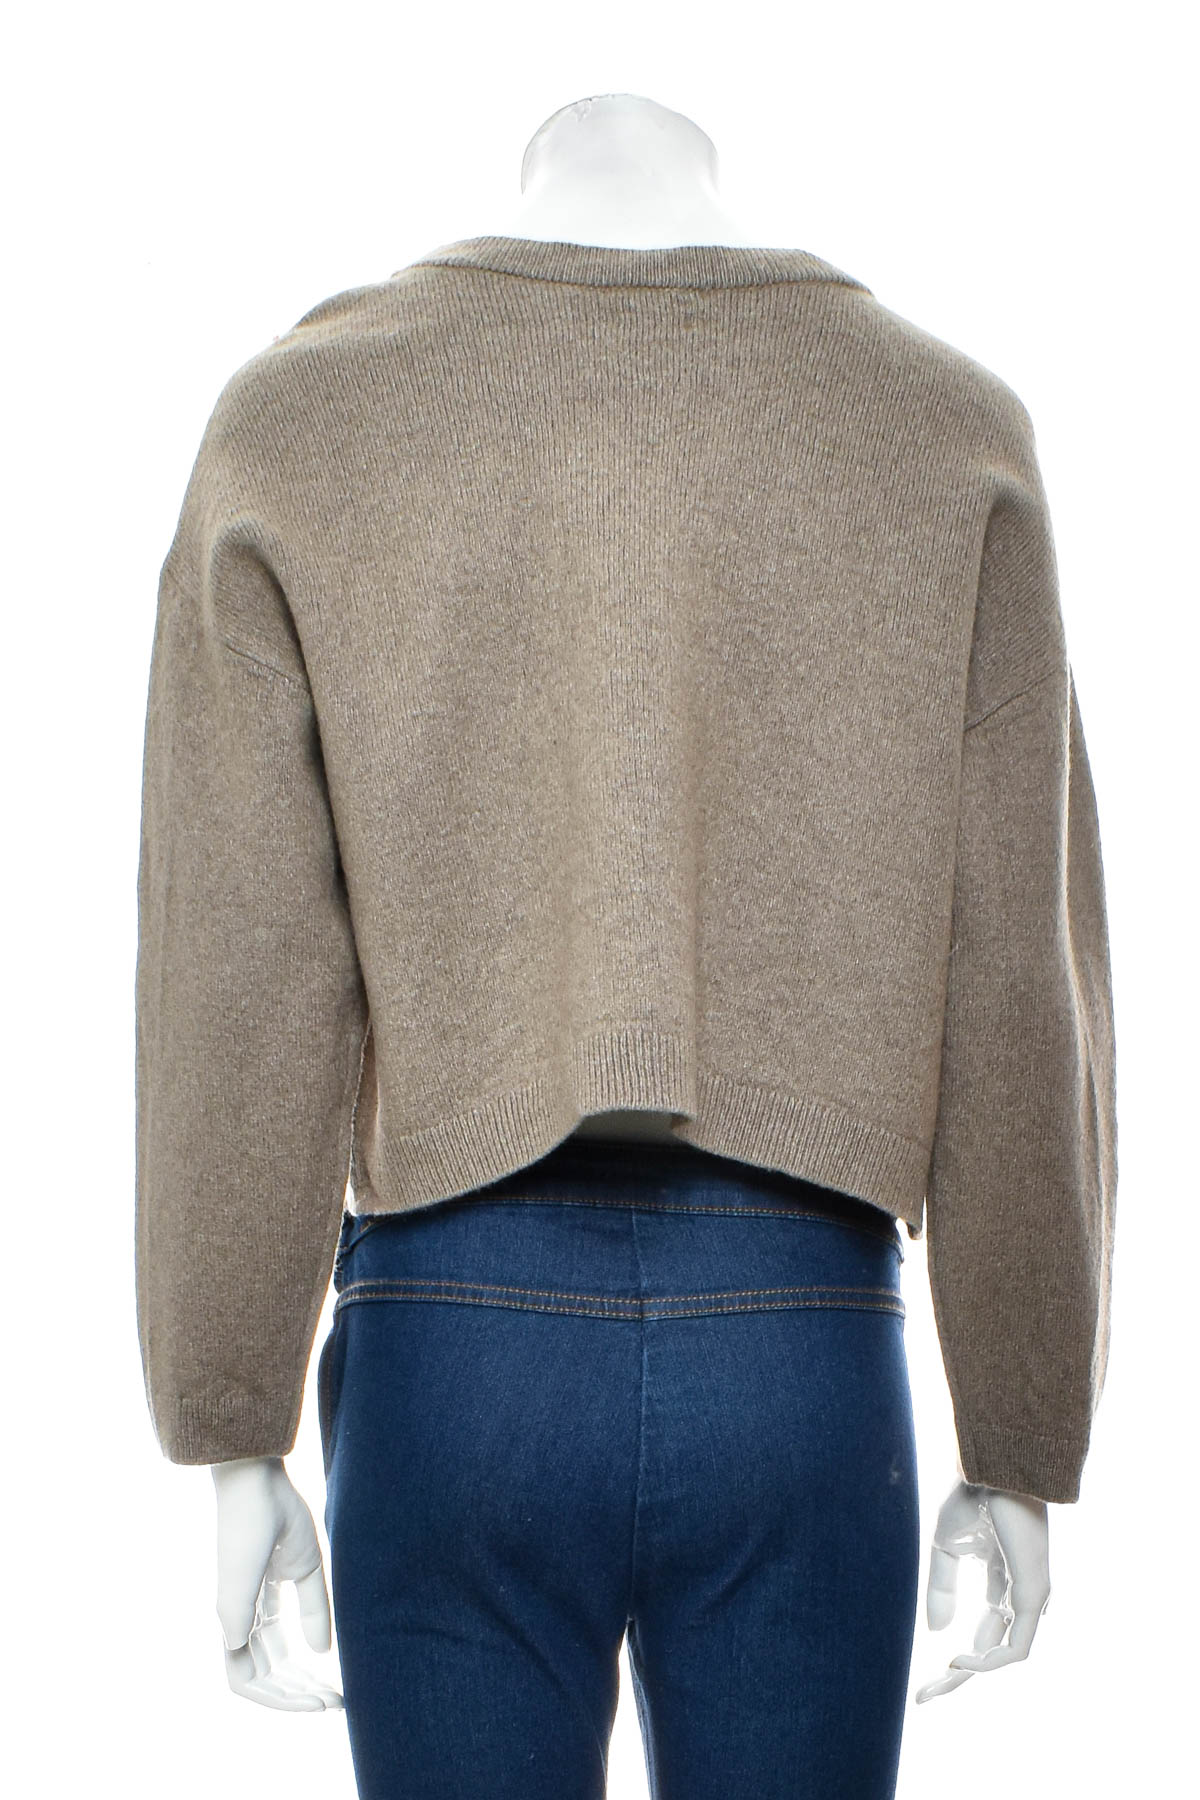 Women's sweater - Massimo Dutti - 1